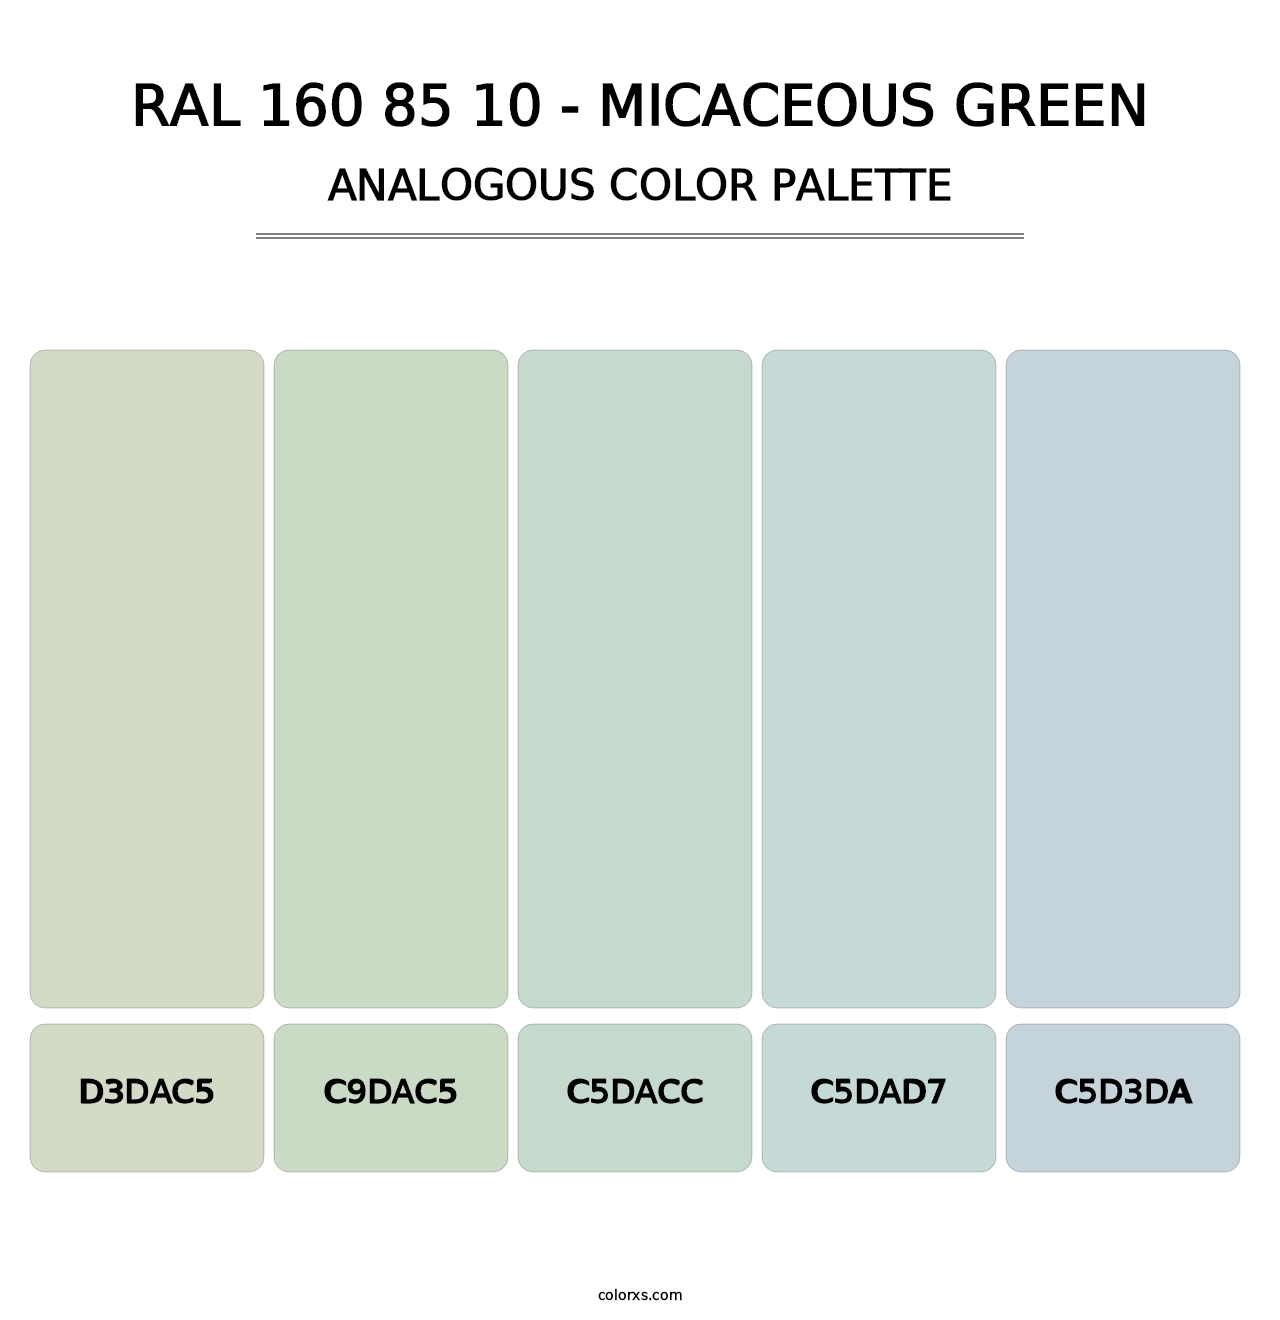 RAL 160 85 10 - Micaceous Green - Analogous Color Palette